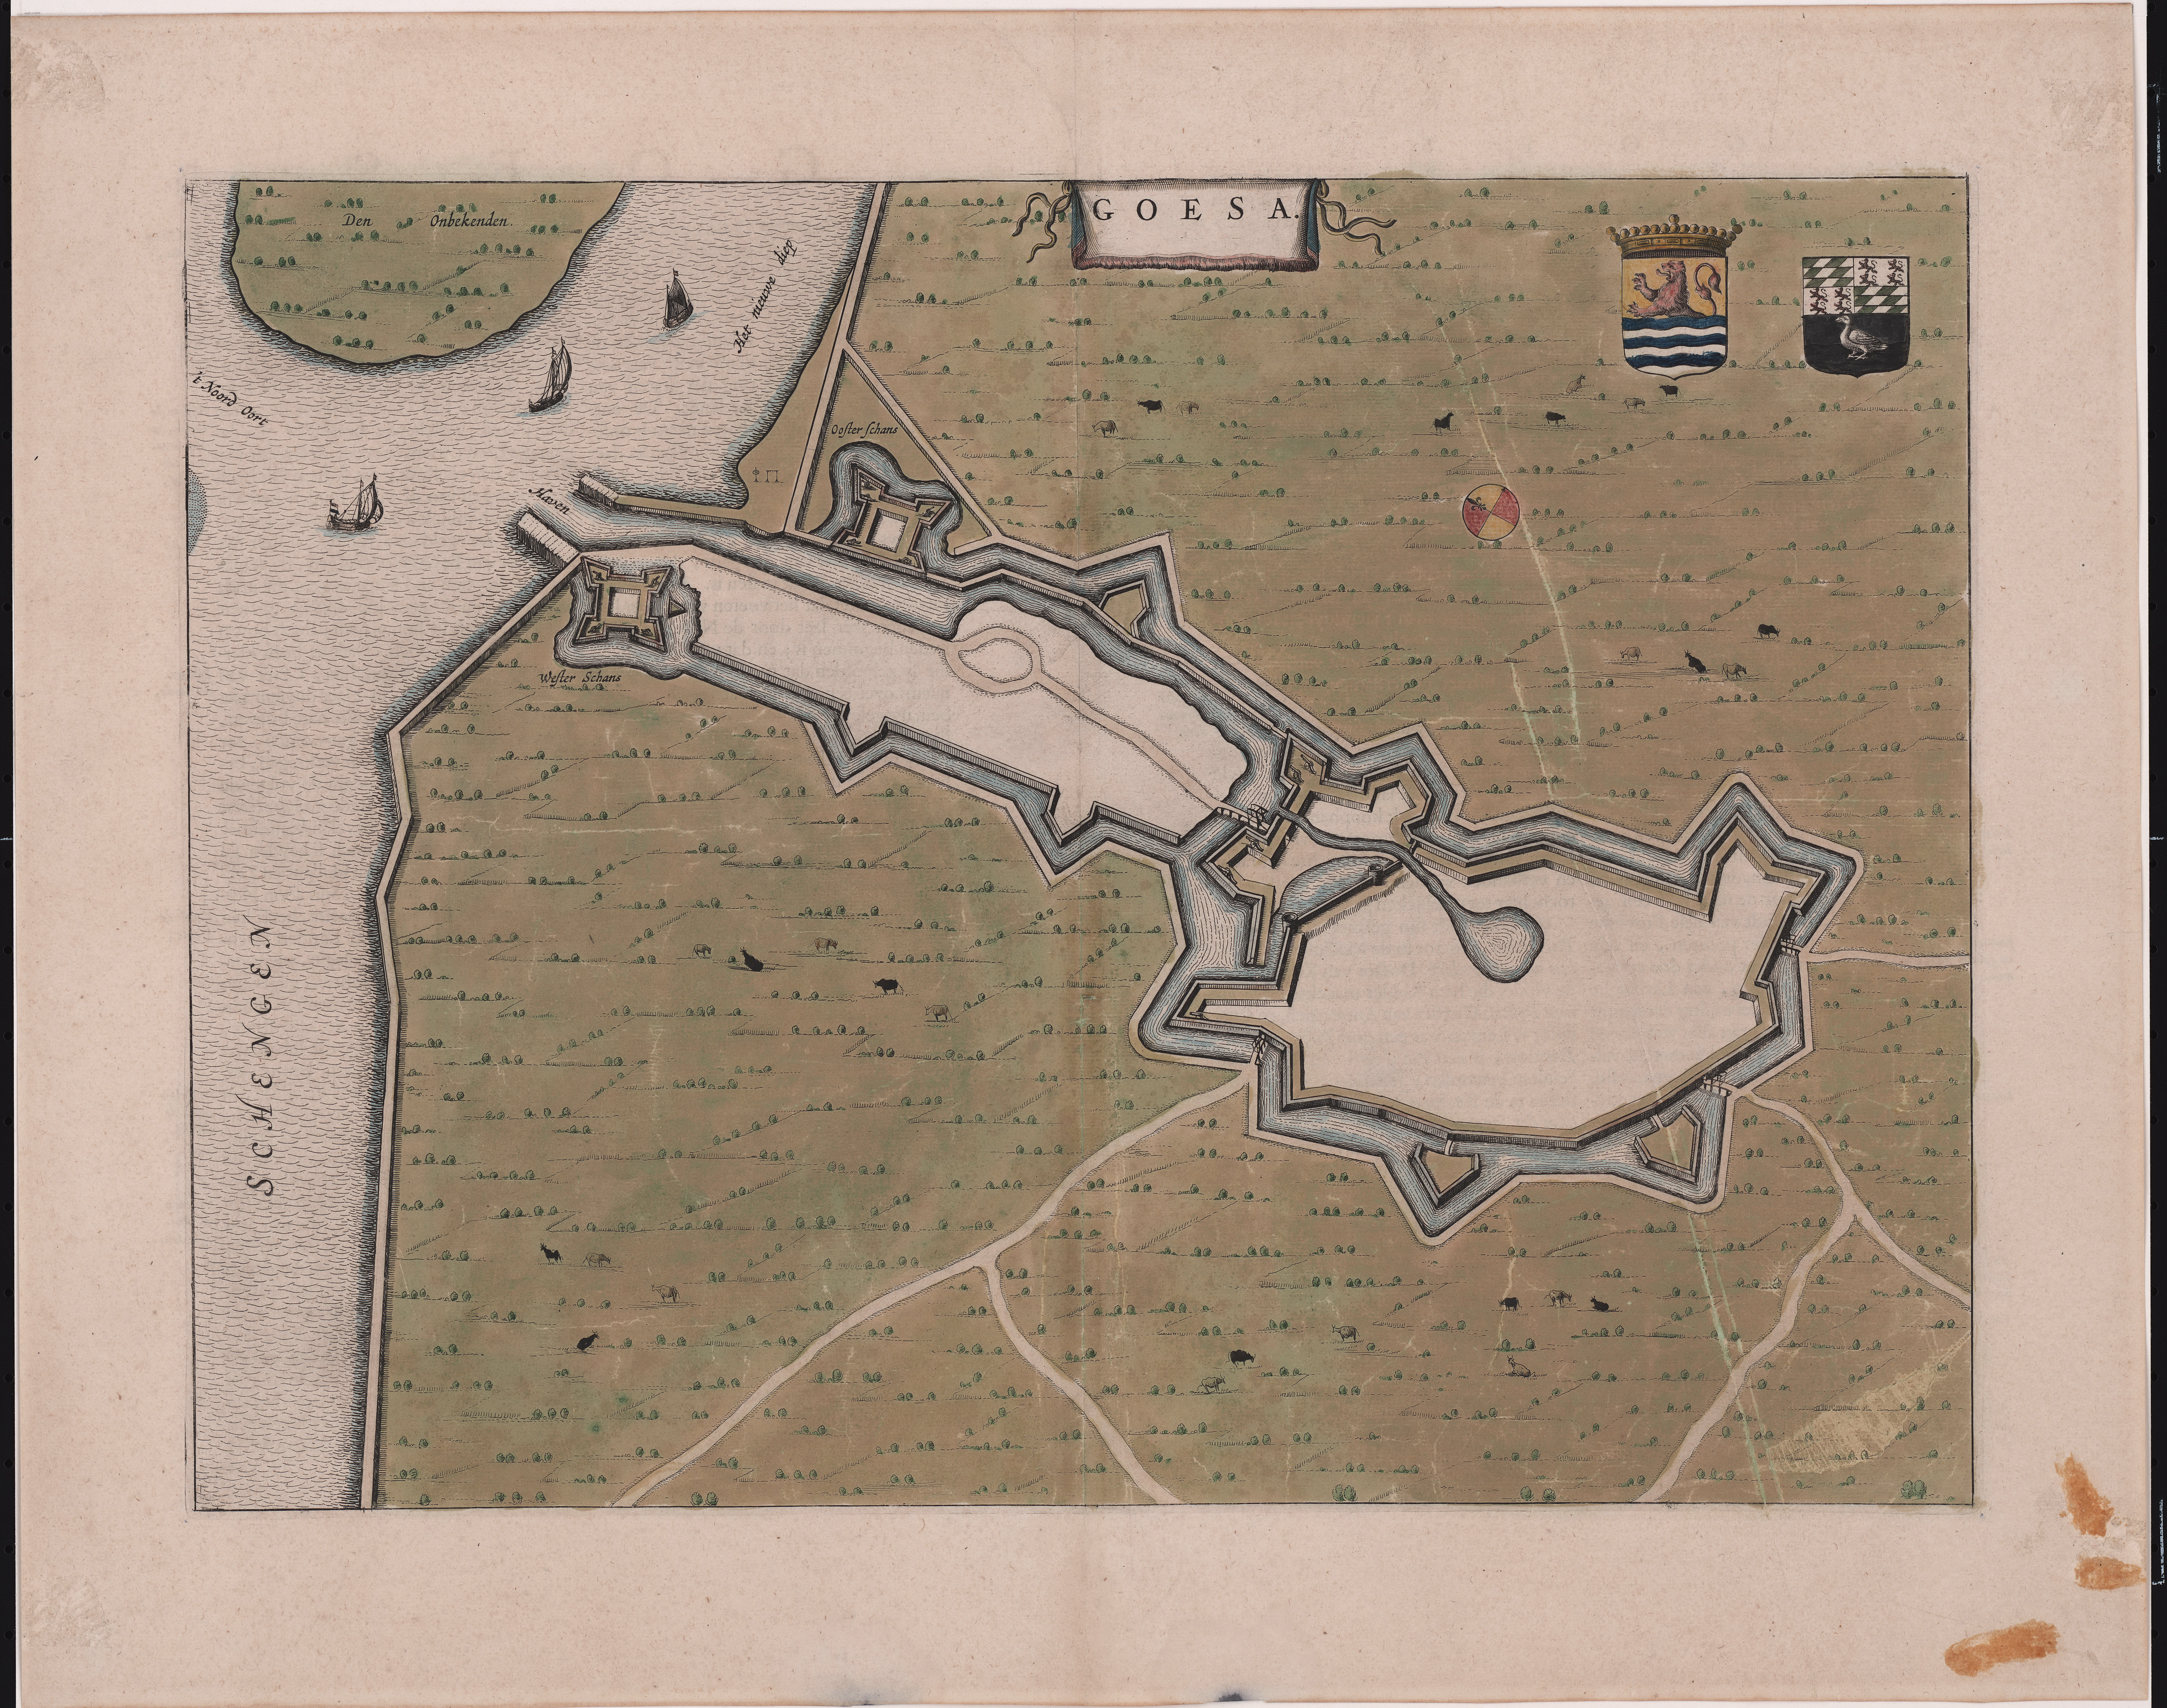 Blinde plattegrond van Goes, J. Blaeu, 1649.